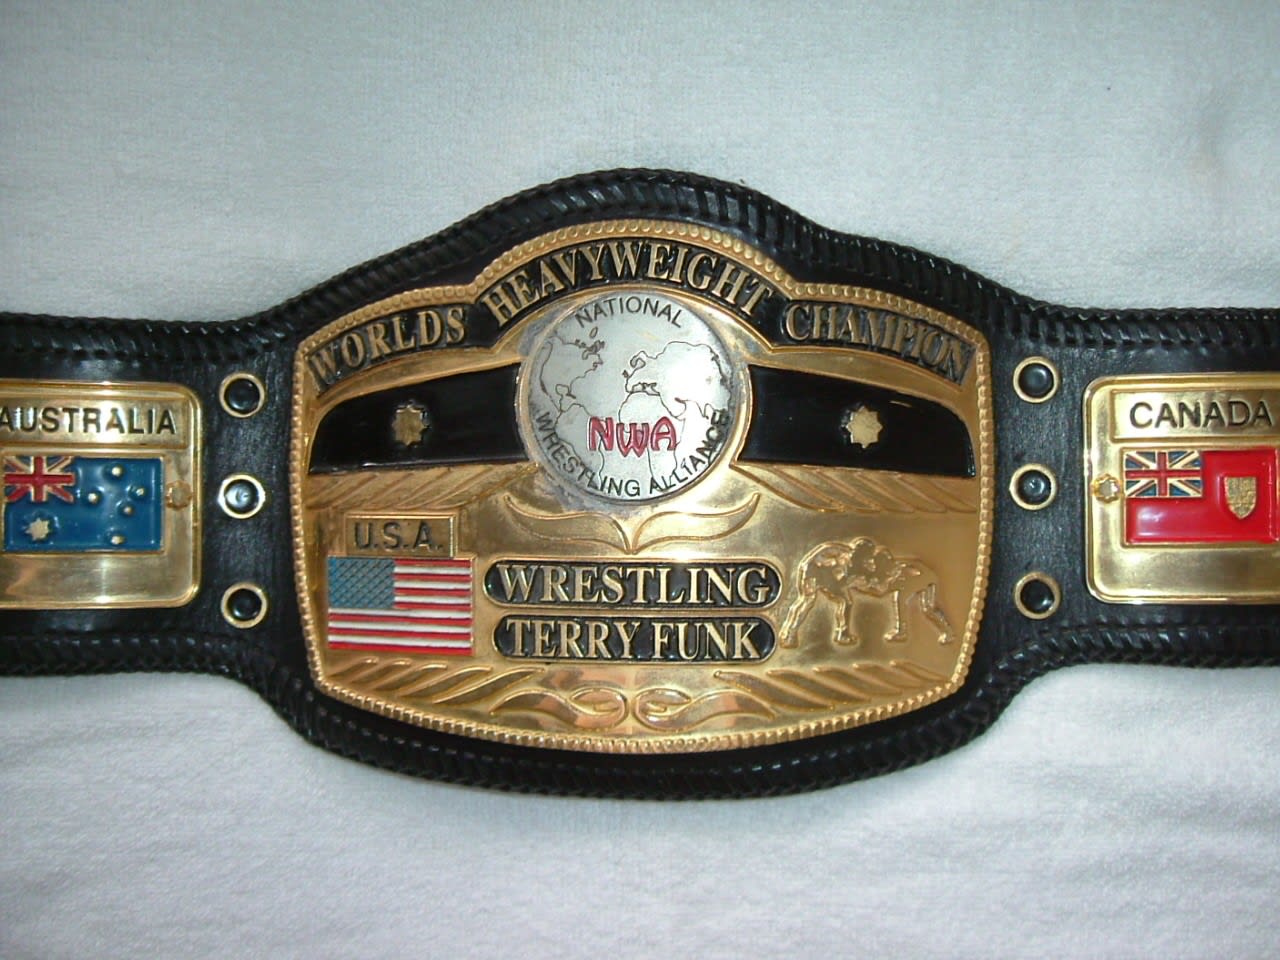 NWA世界ジュニアヘビー級チャンピオンベルトレプリカ スポーツ 格闘技 